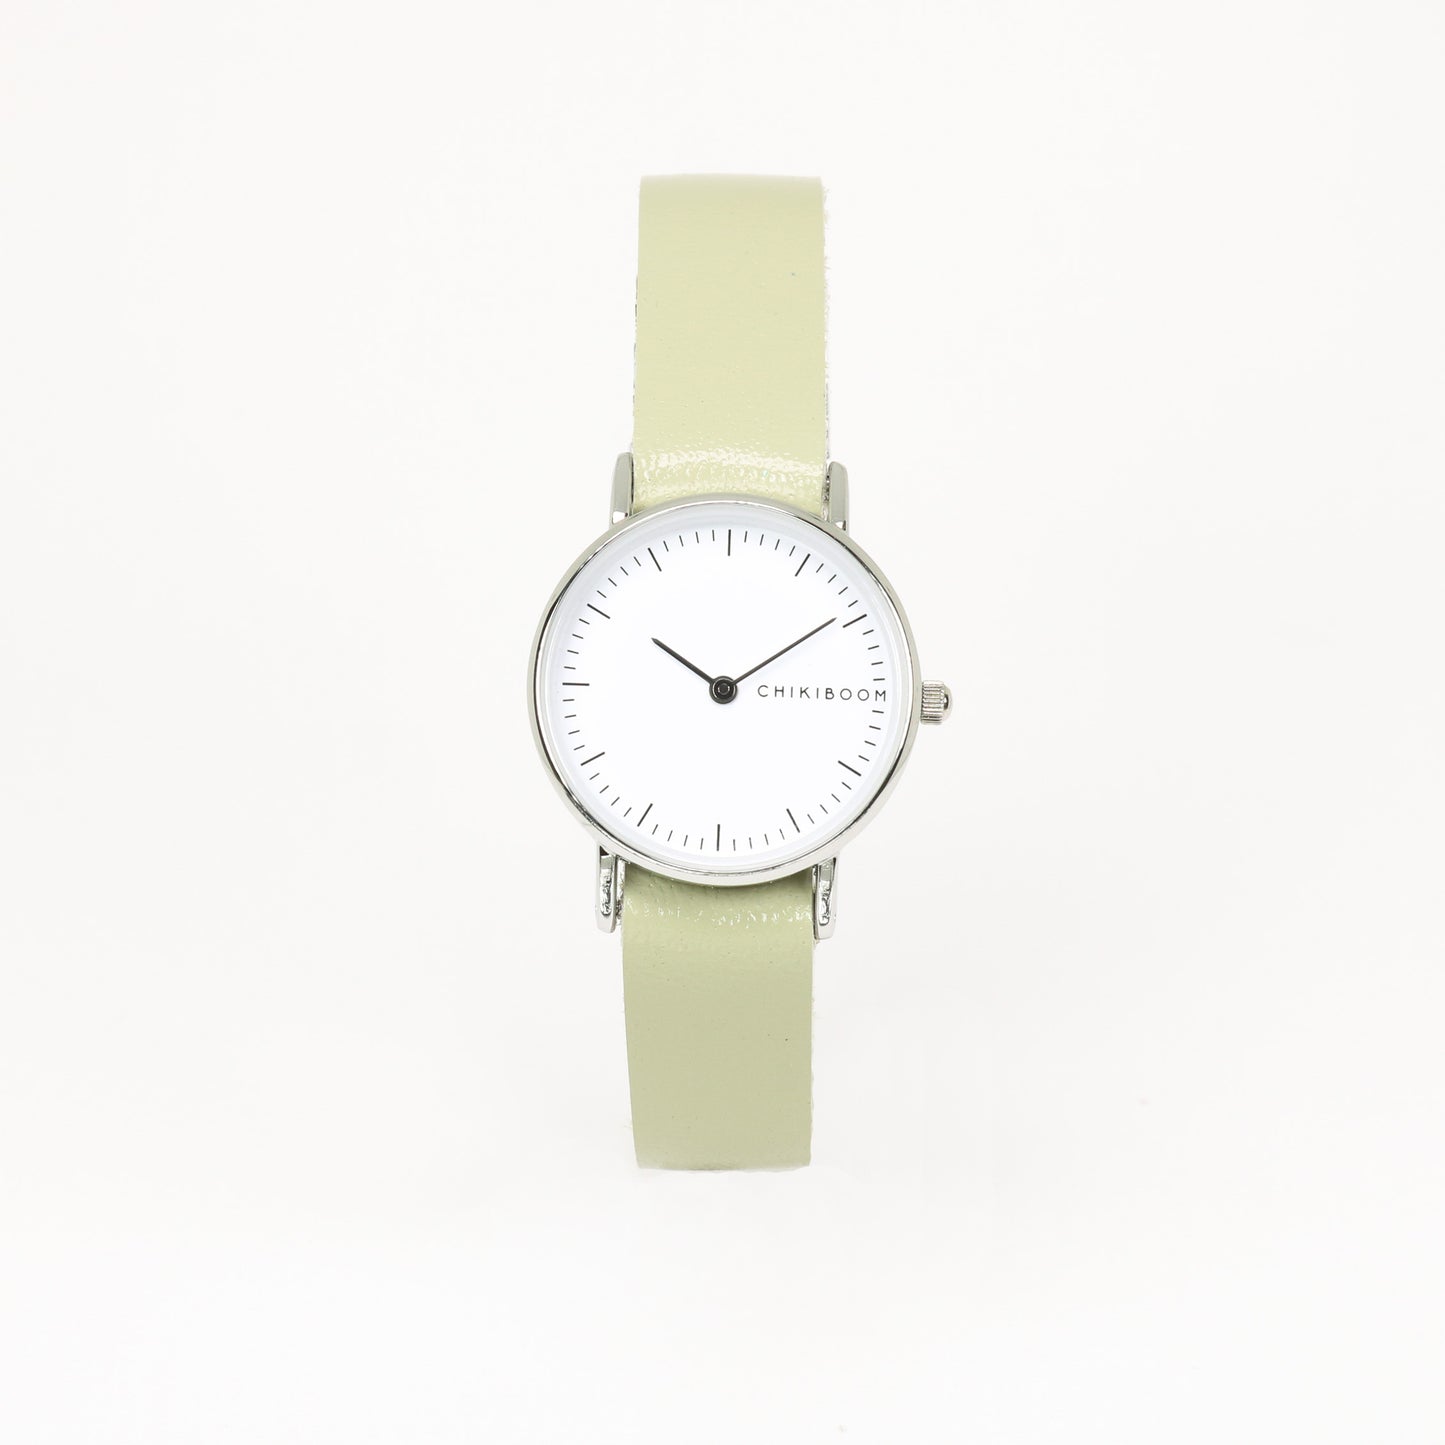 Pale green / white women's watch